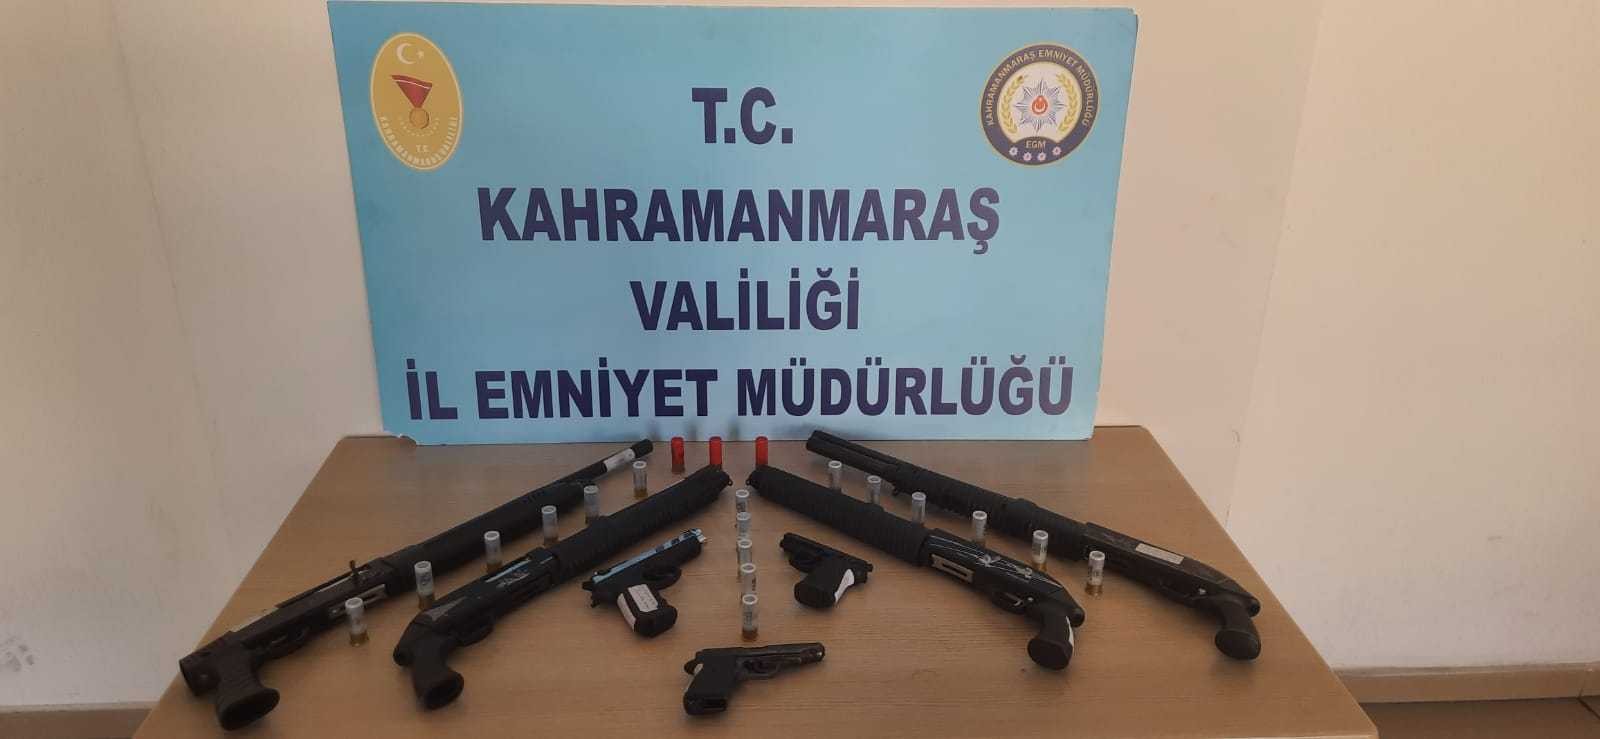 Kahramanmaraş’ta 8 adet silah ele geçirildi #kahramanmaras